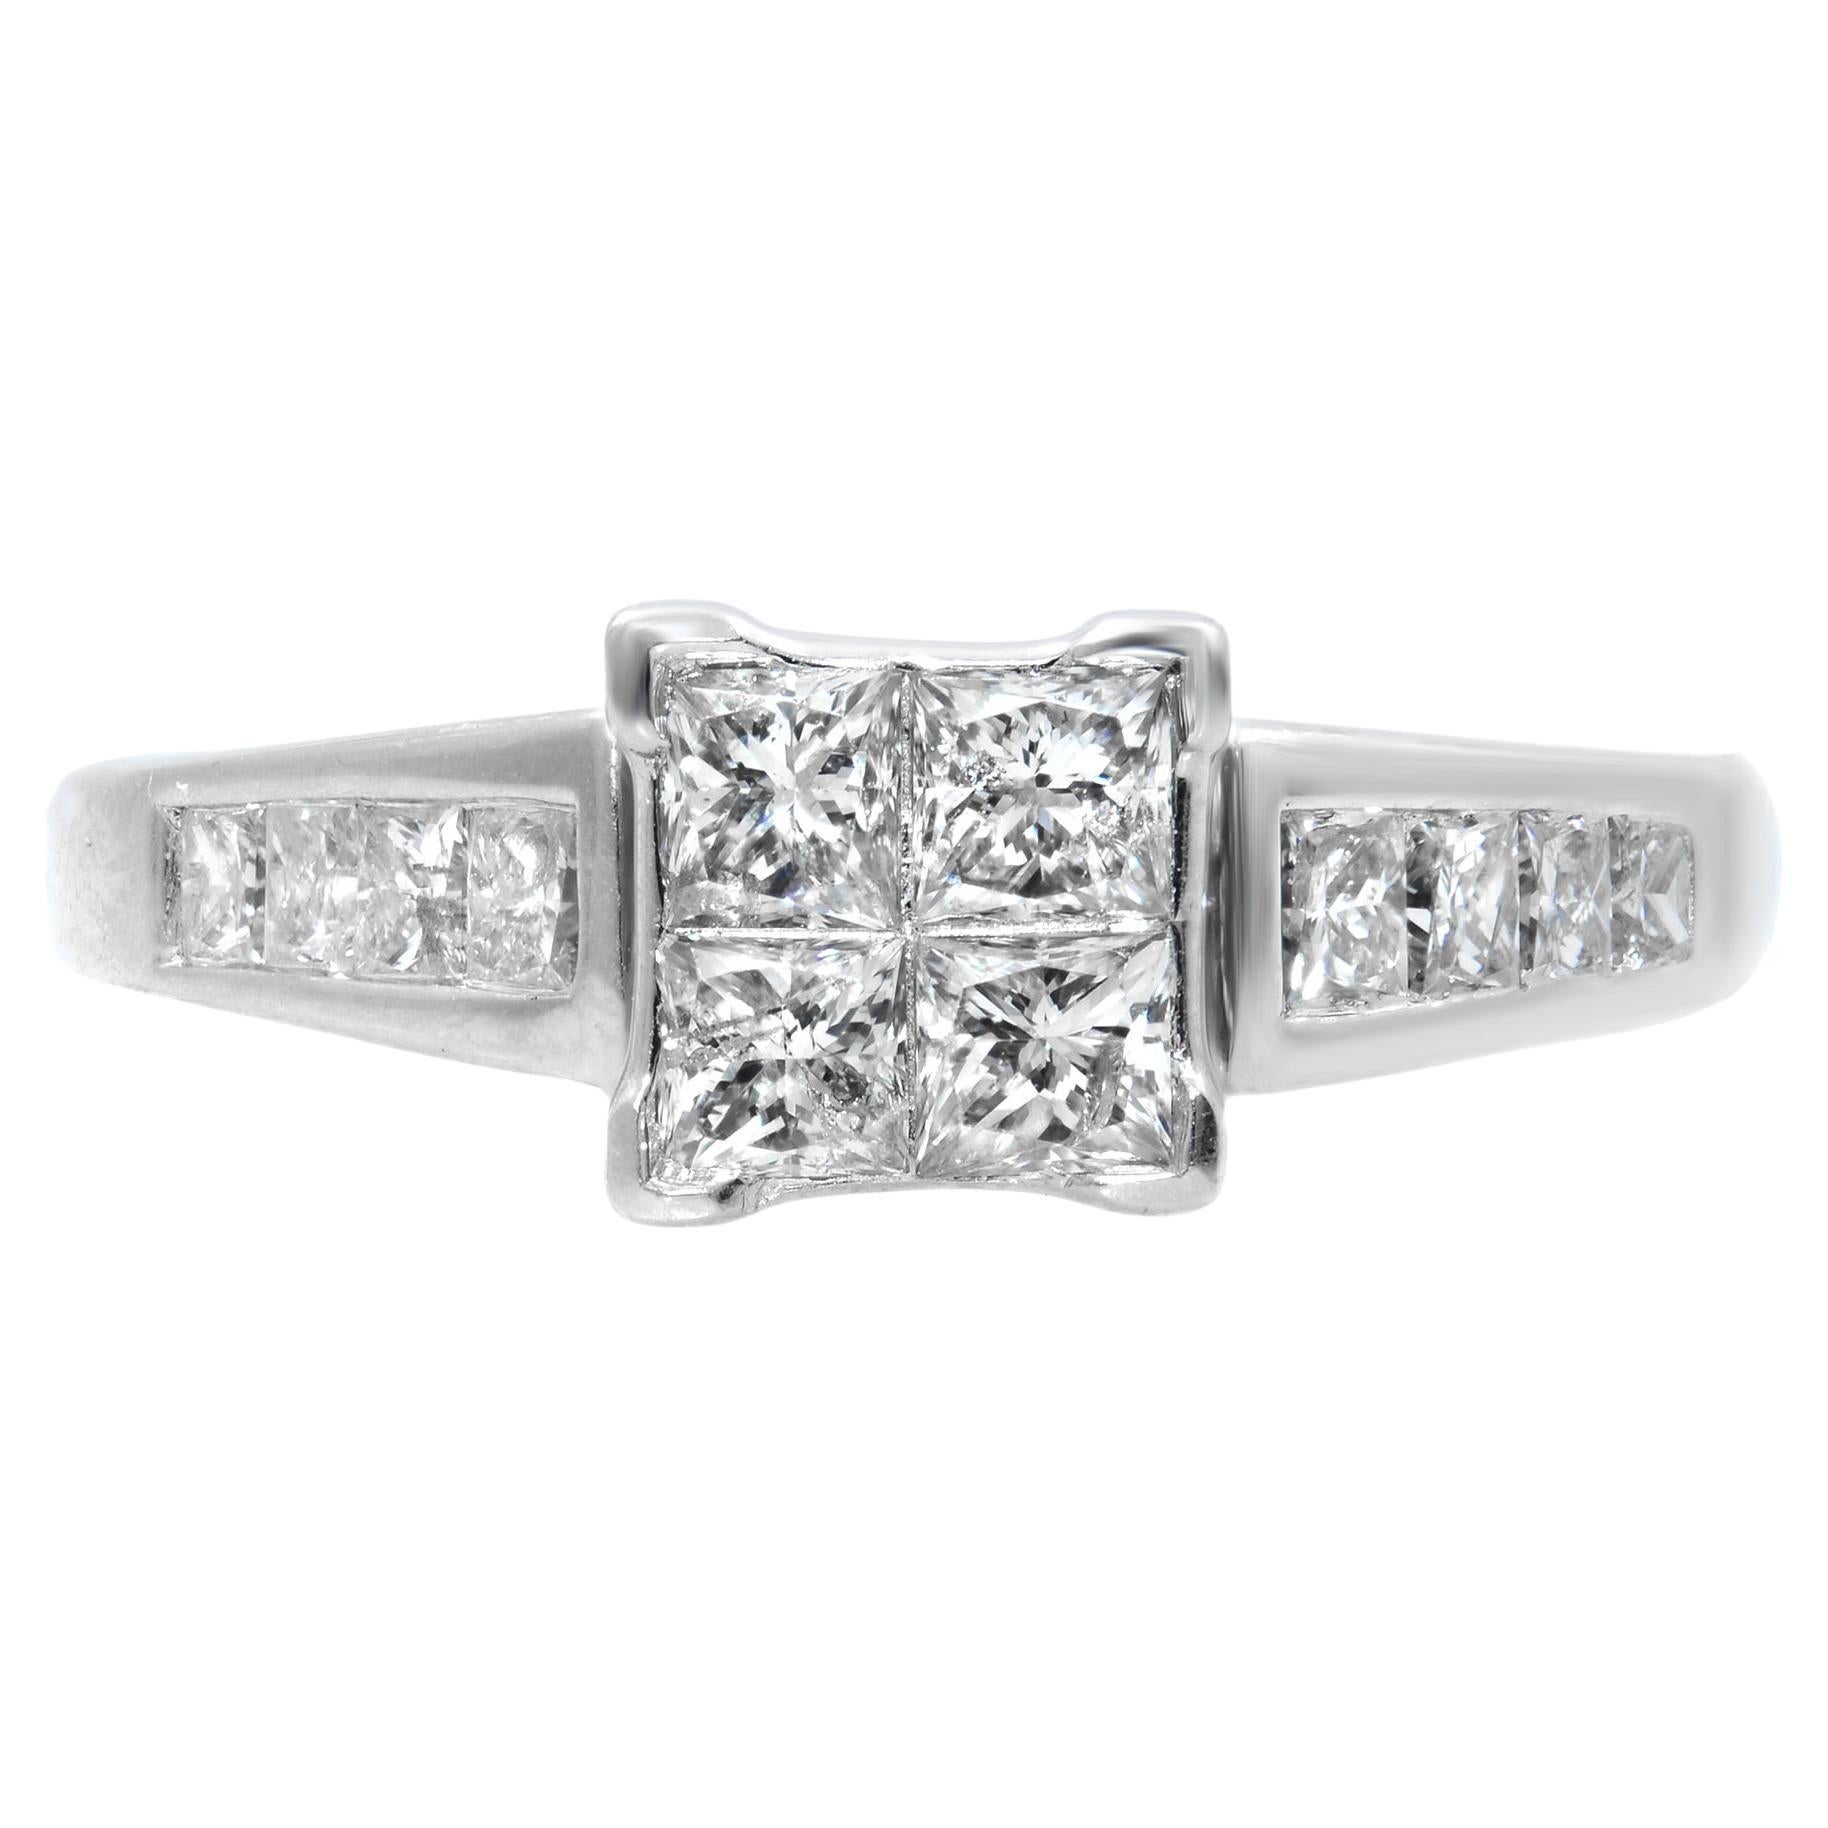 Rachel Koen 1.00Cttw Princess Cut Diamond Engagement Ring 14K White Gold Size 6